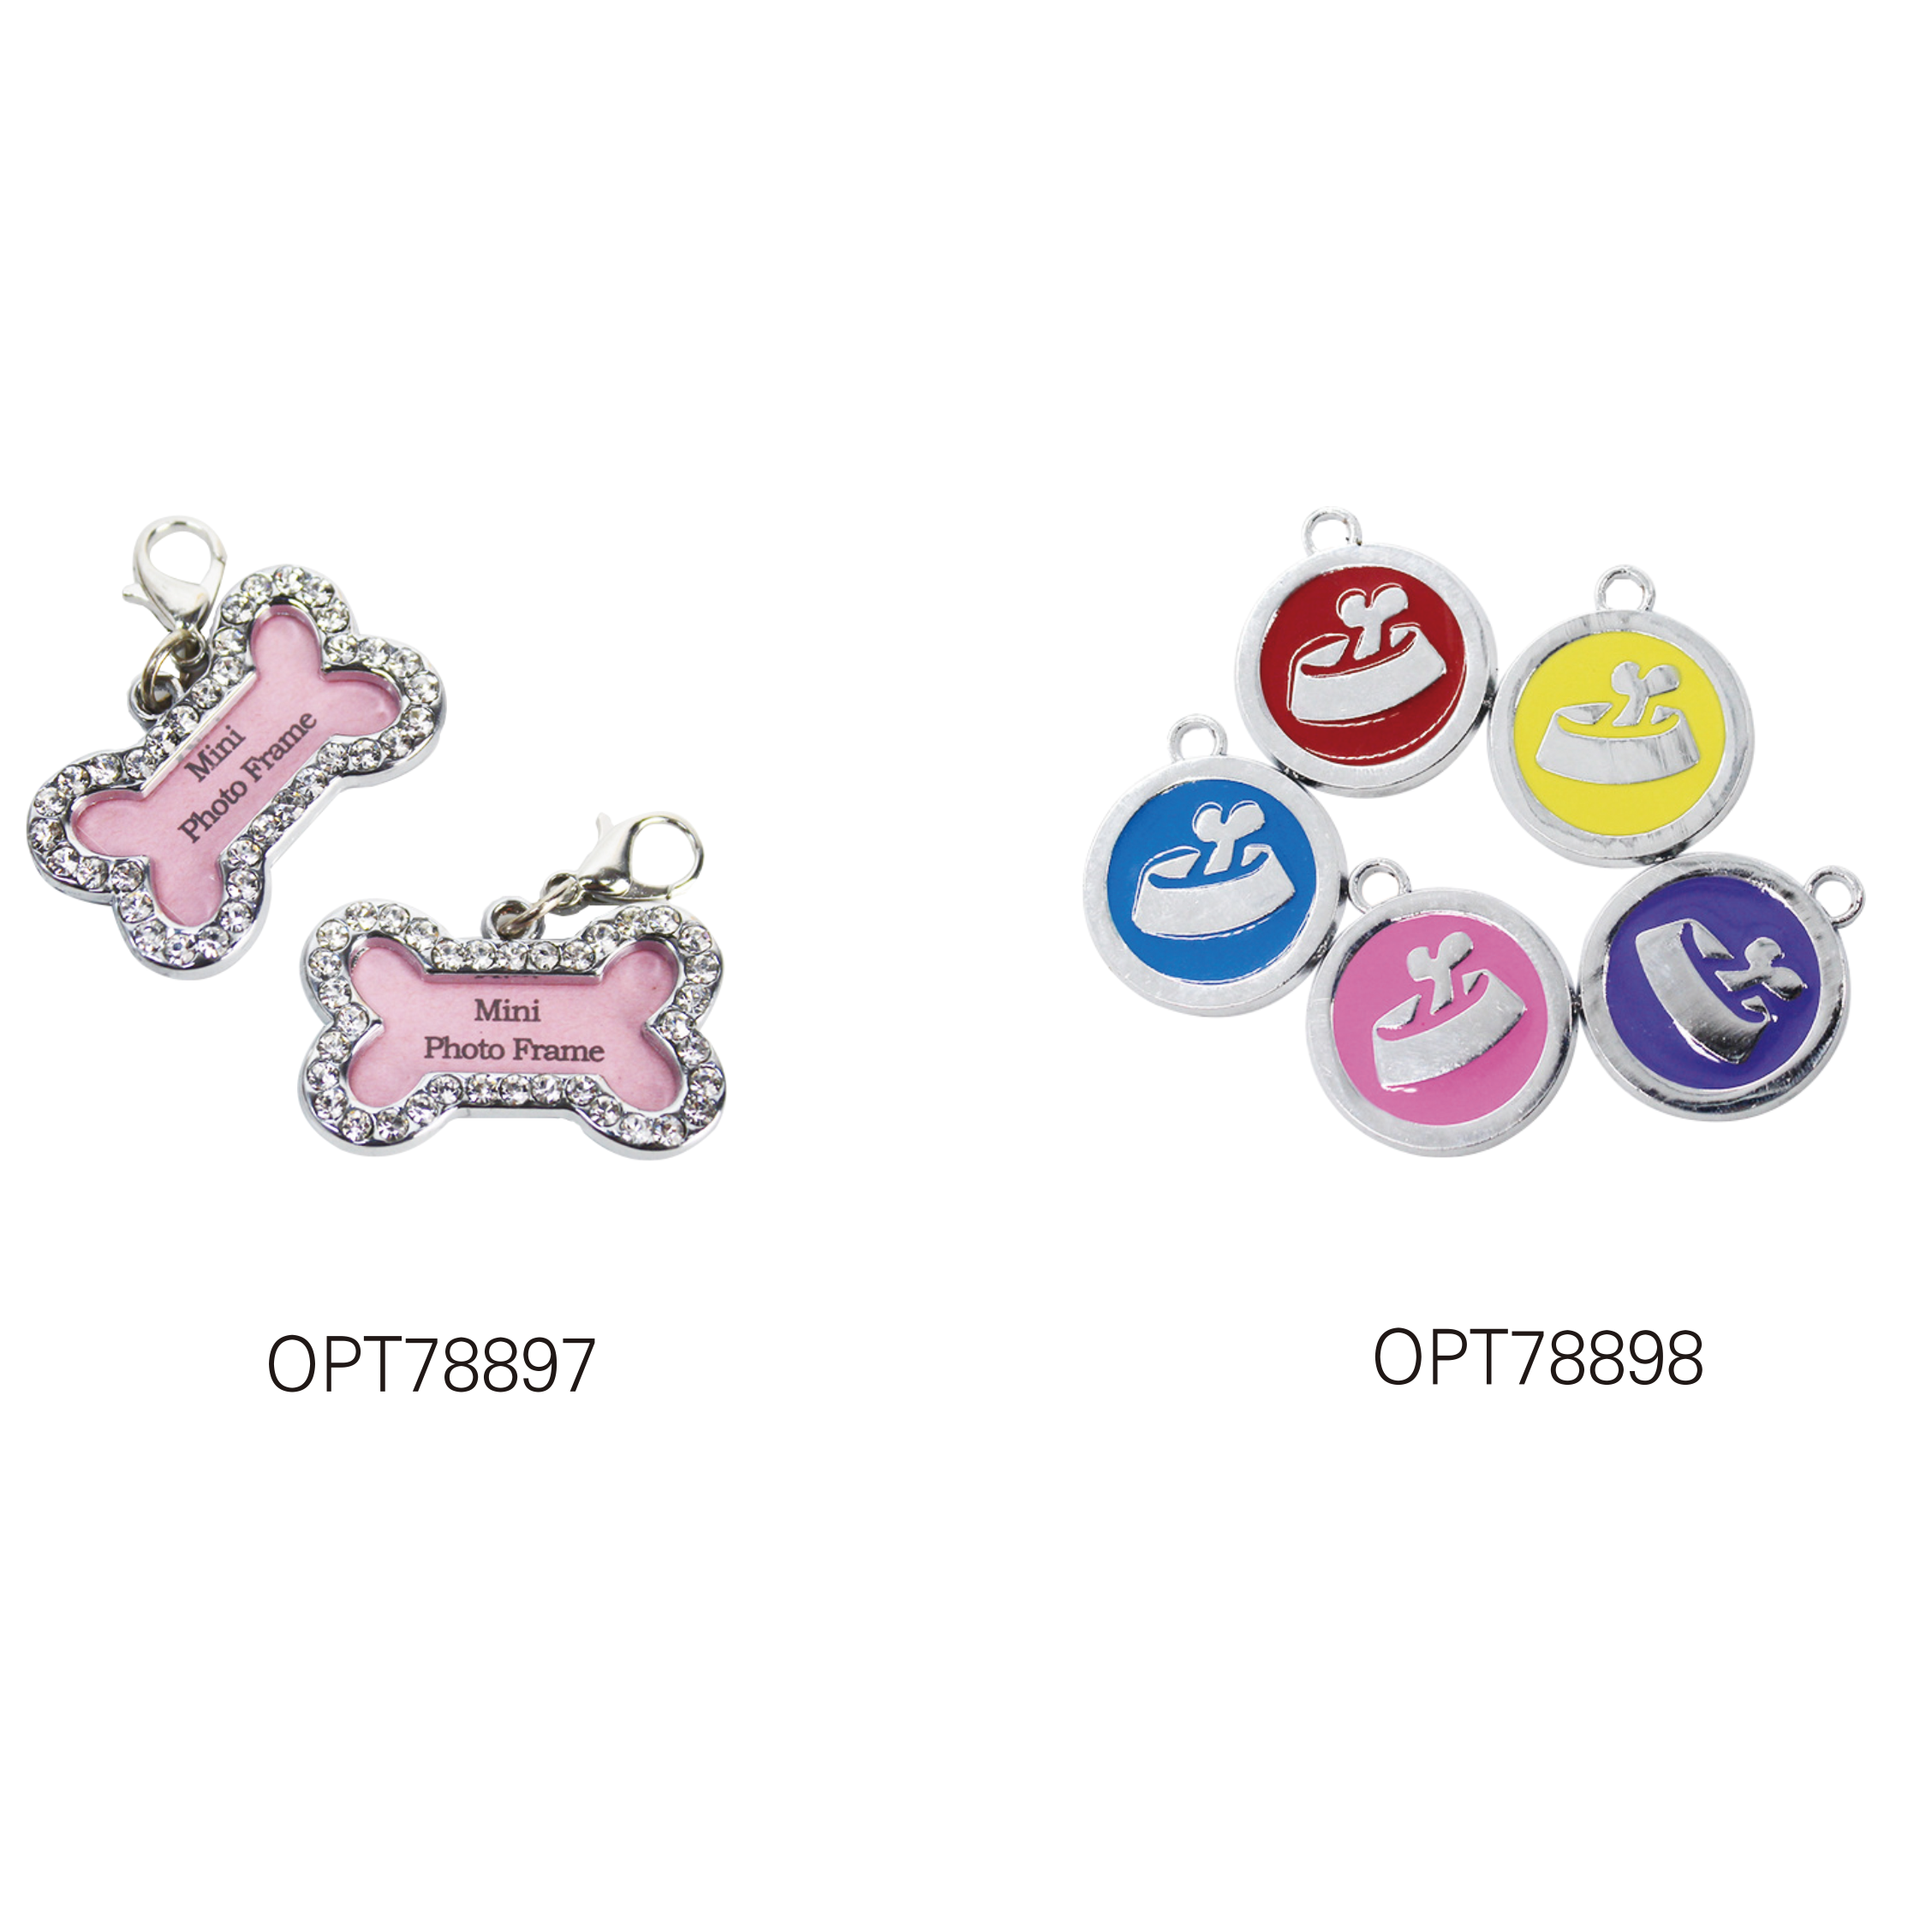 OPT78897-OPT78898 Cat tags & collars